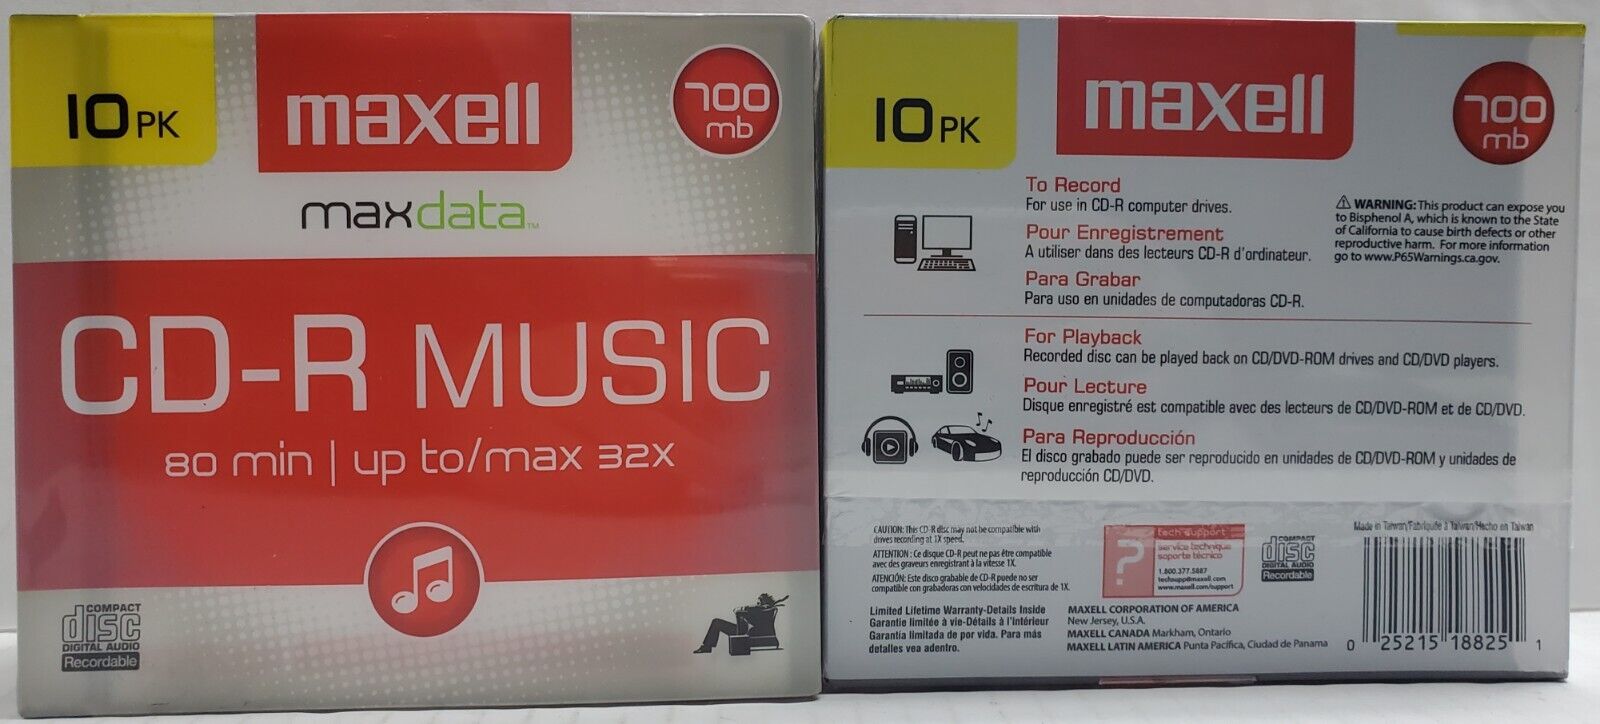 2pk New 10 Pack Each Maxell MaxData CD-R Music 700MB 80 Min Record up/to 32x 